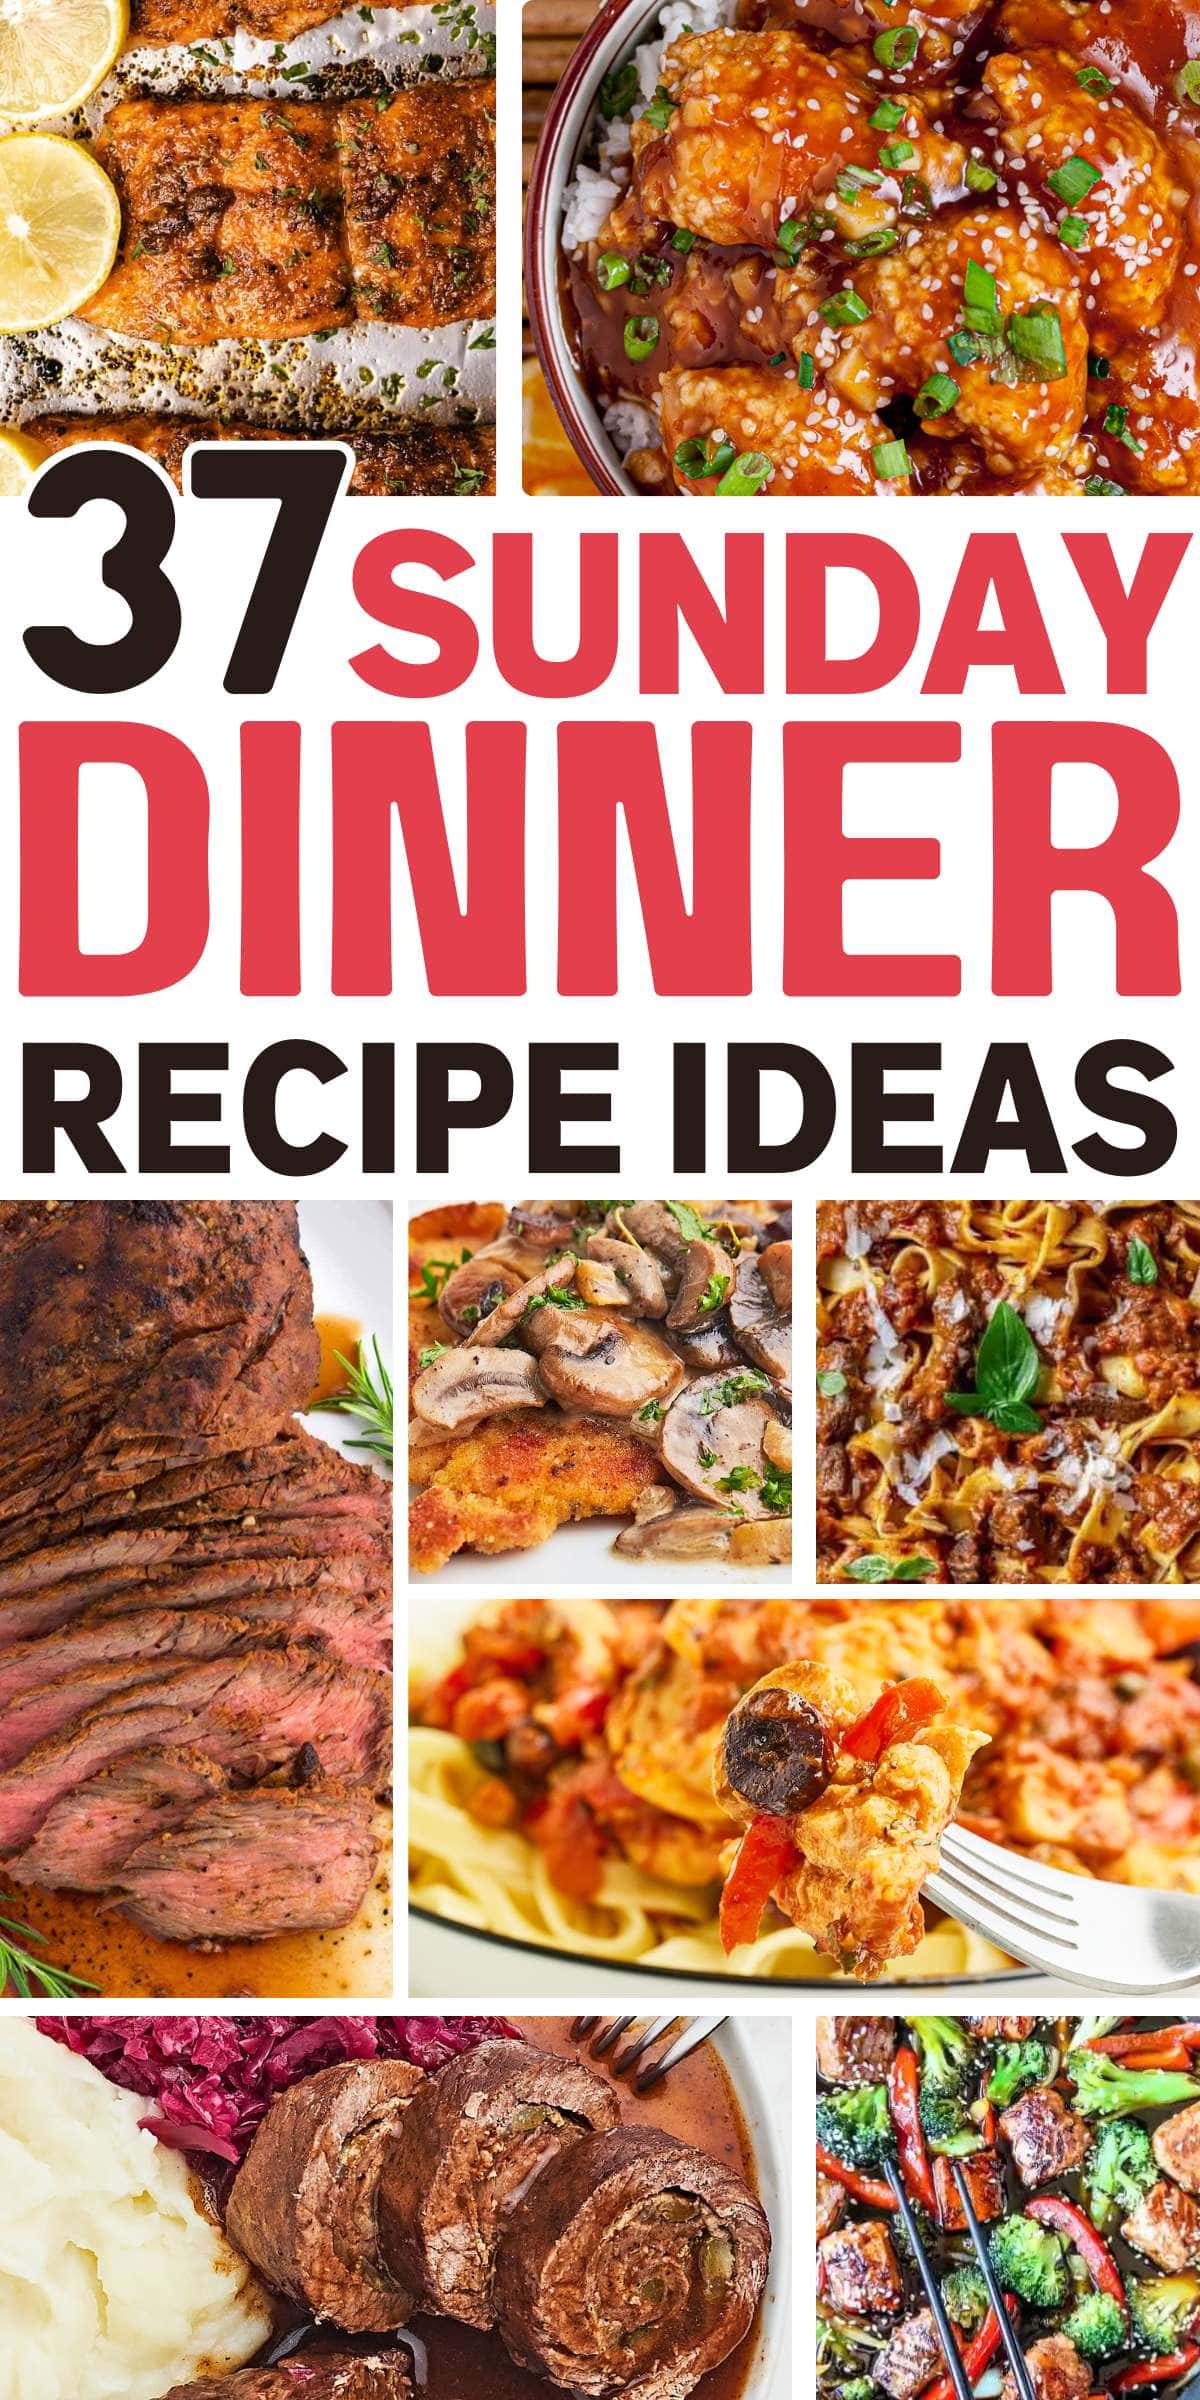 49 Easy Sunday Dinner Recipe Ideas Your Family Will Love